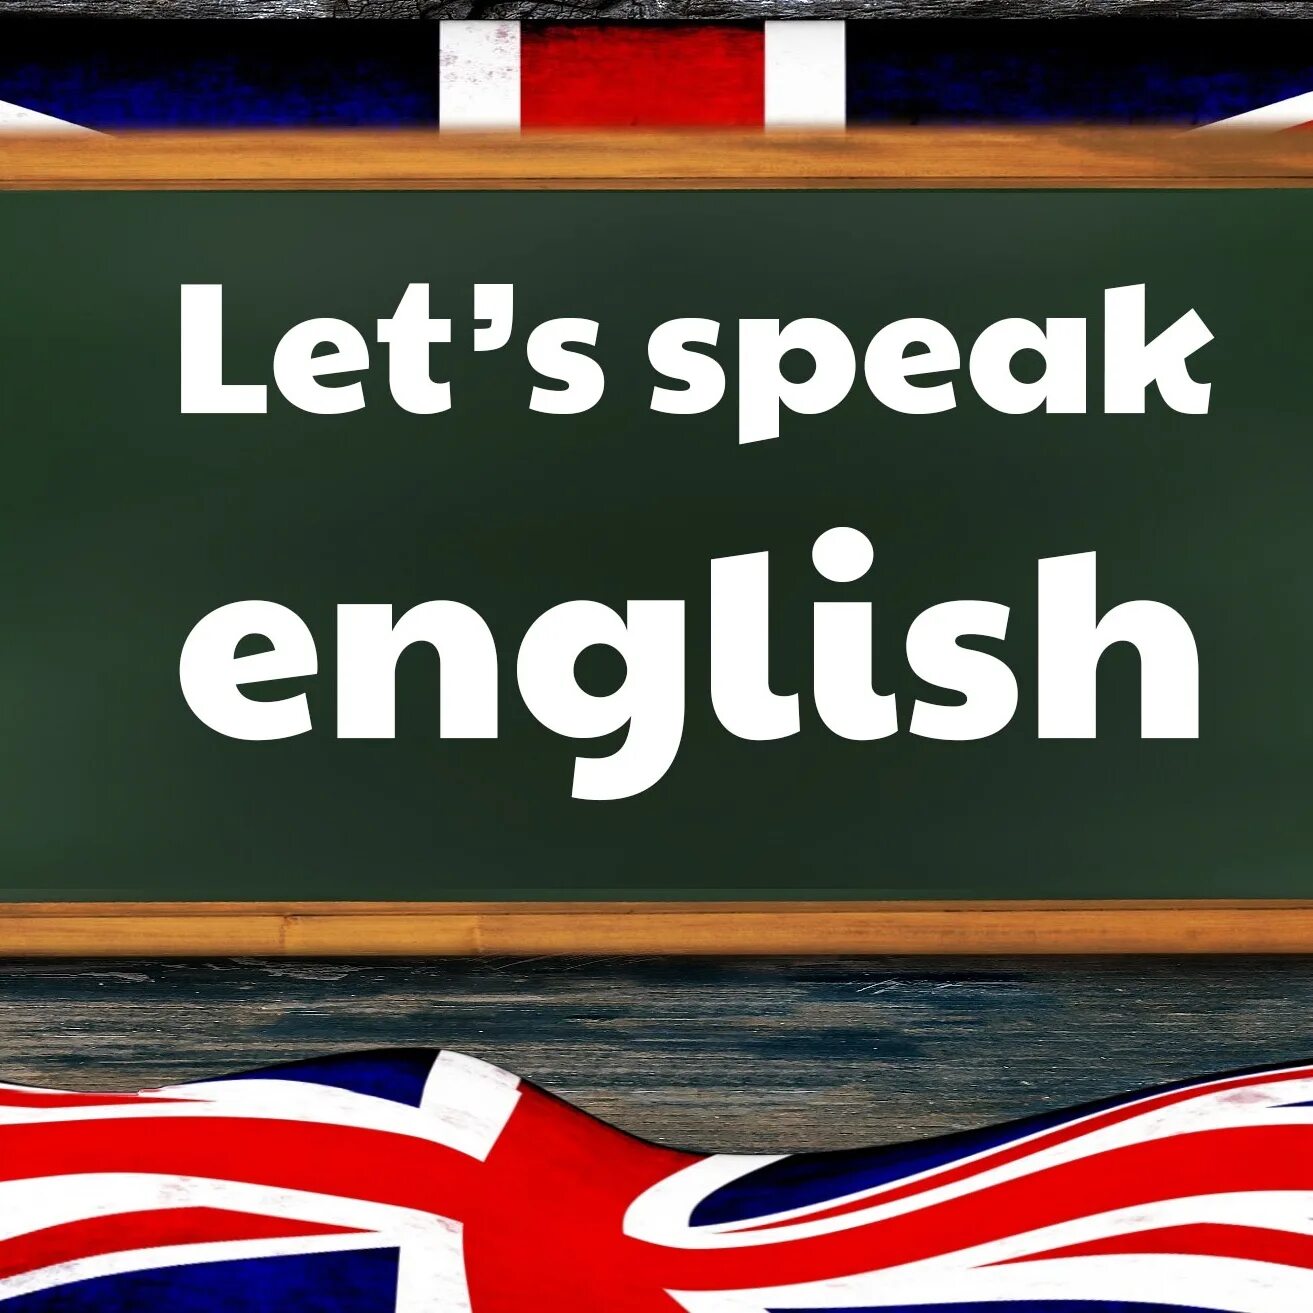 We like speaking english